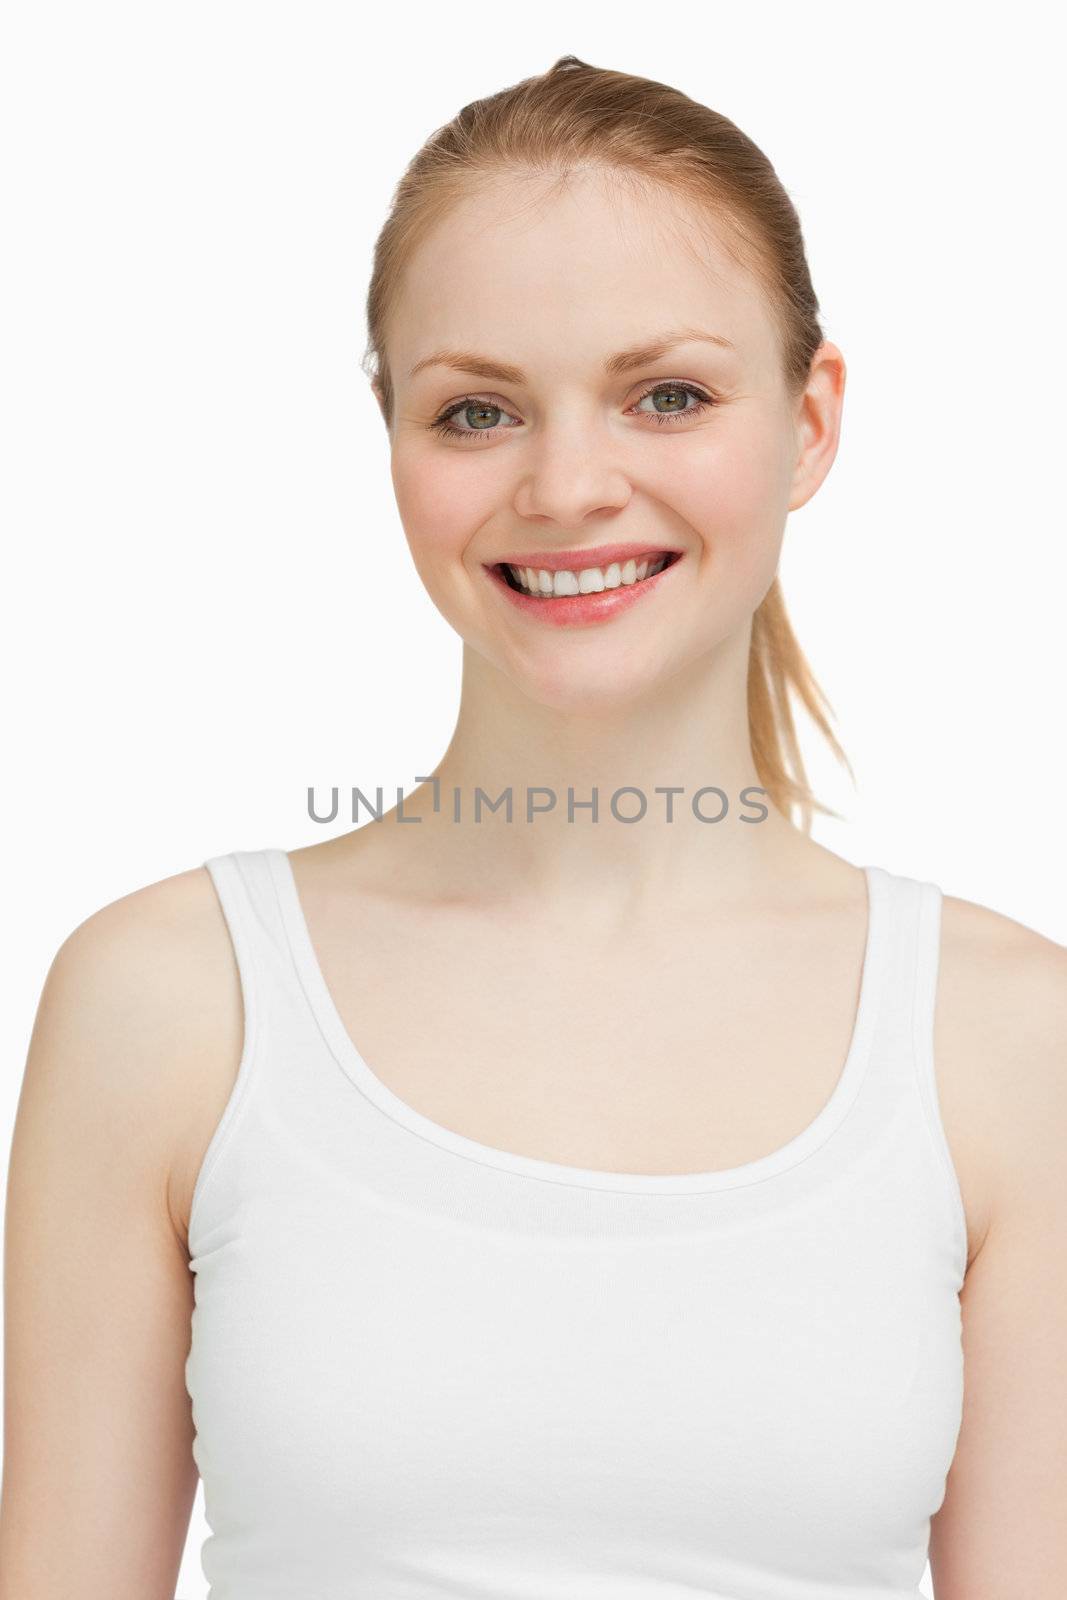 Joyful blonde-haired woman against white background